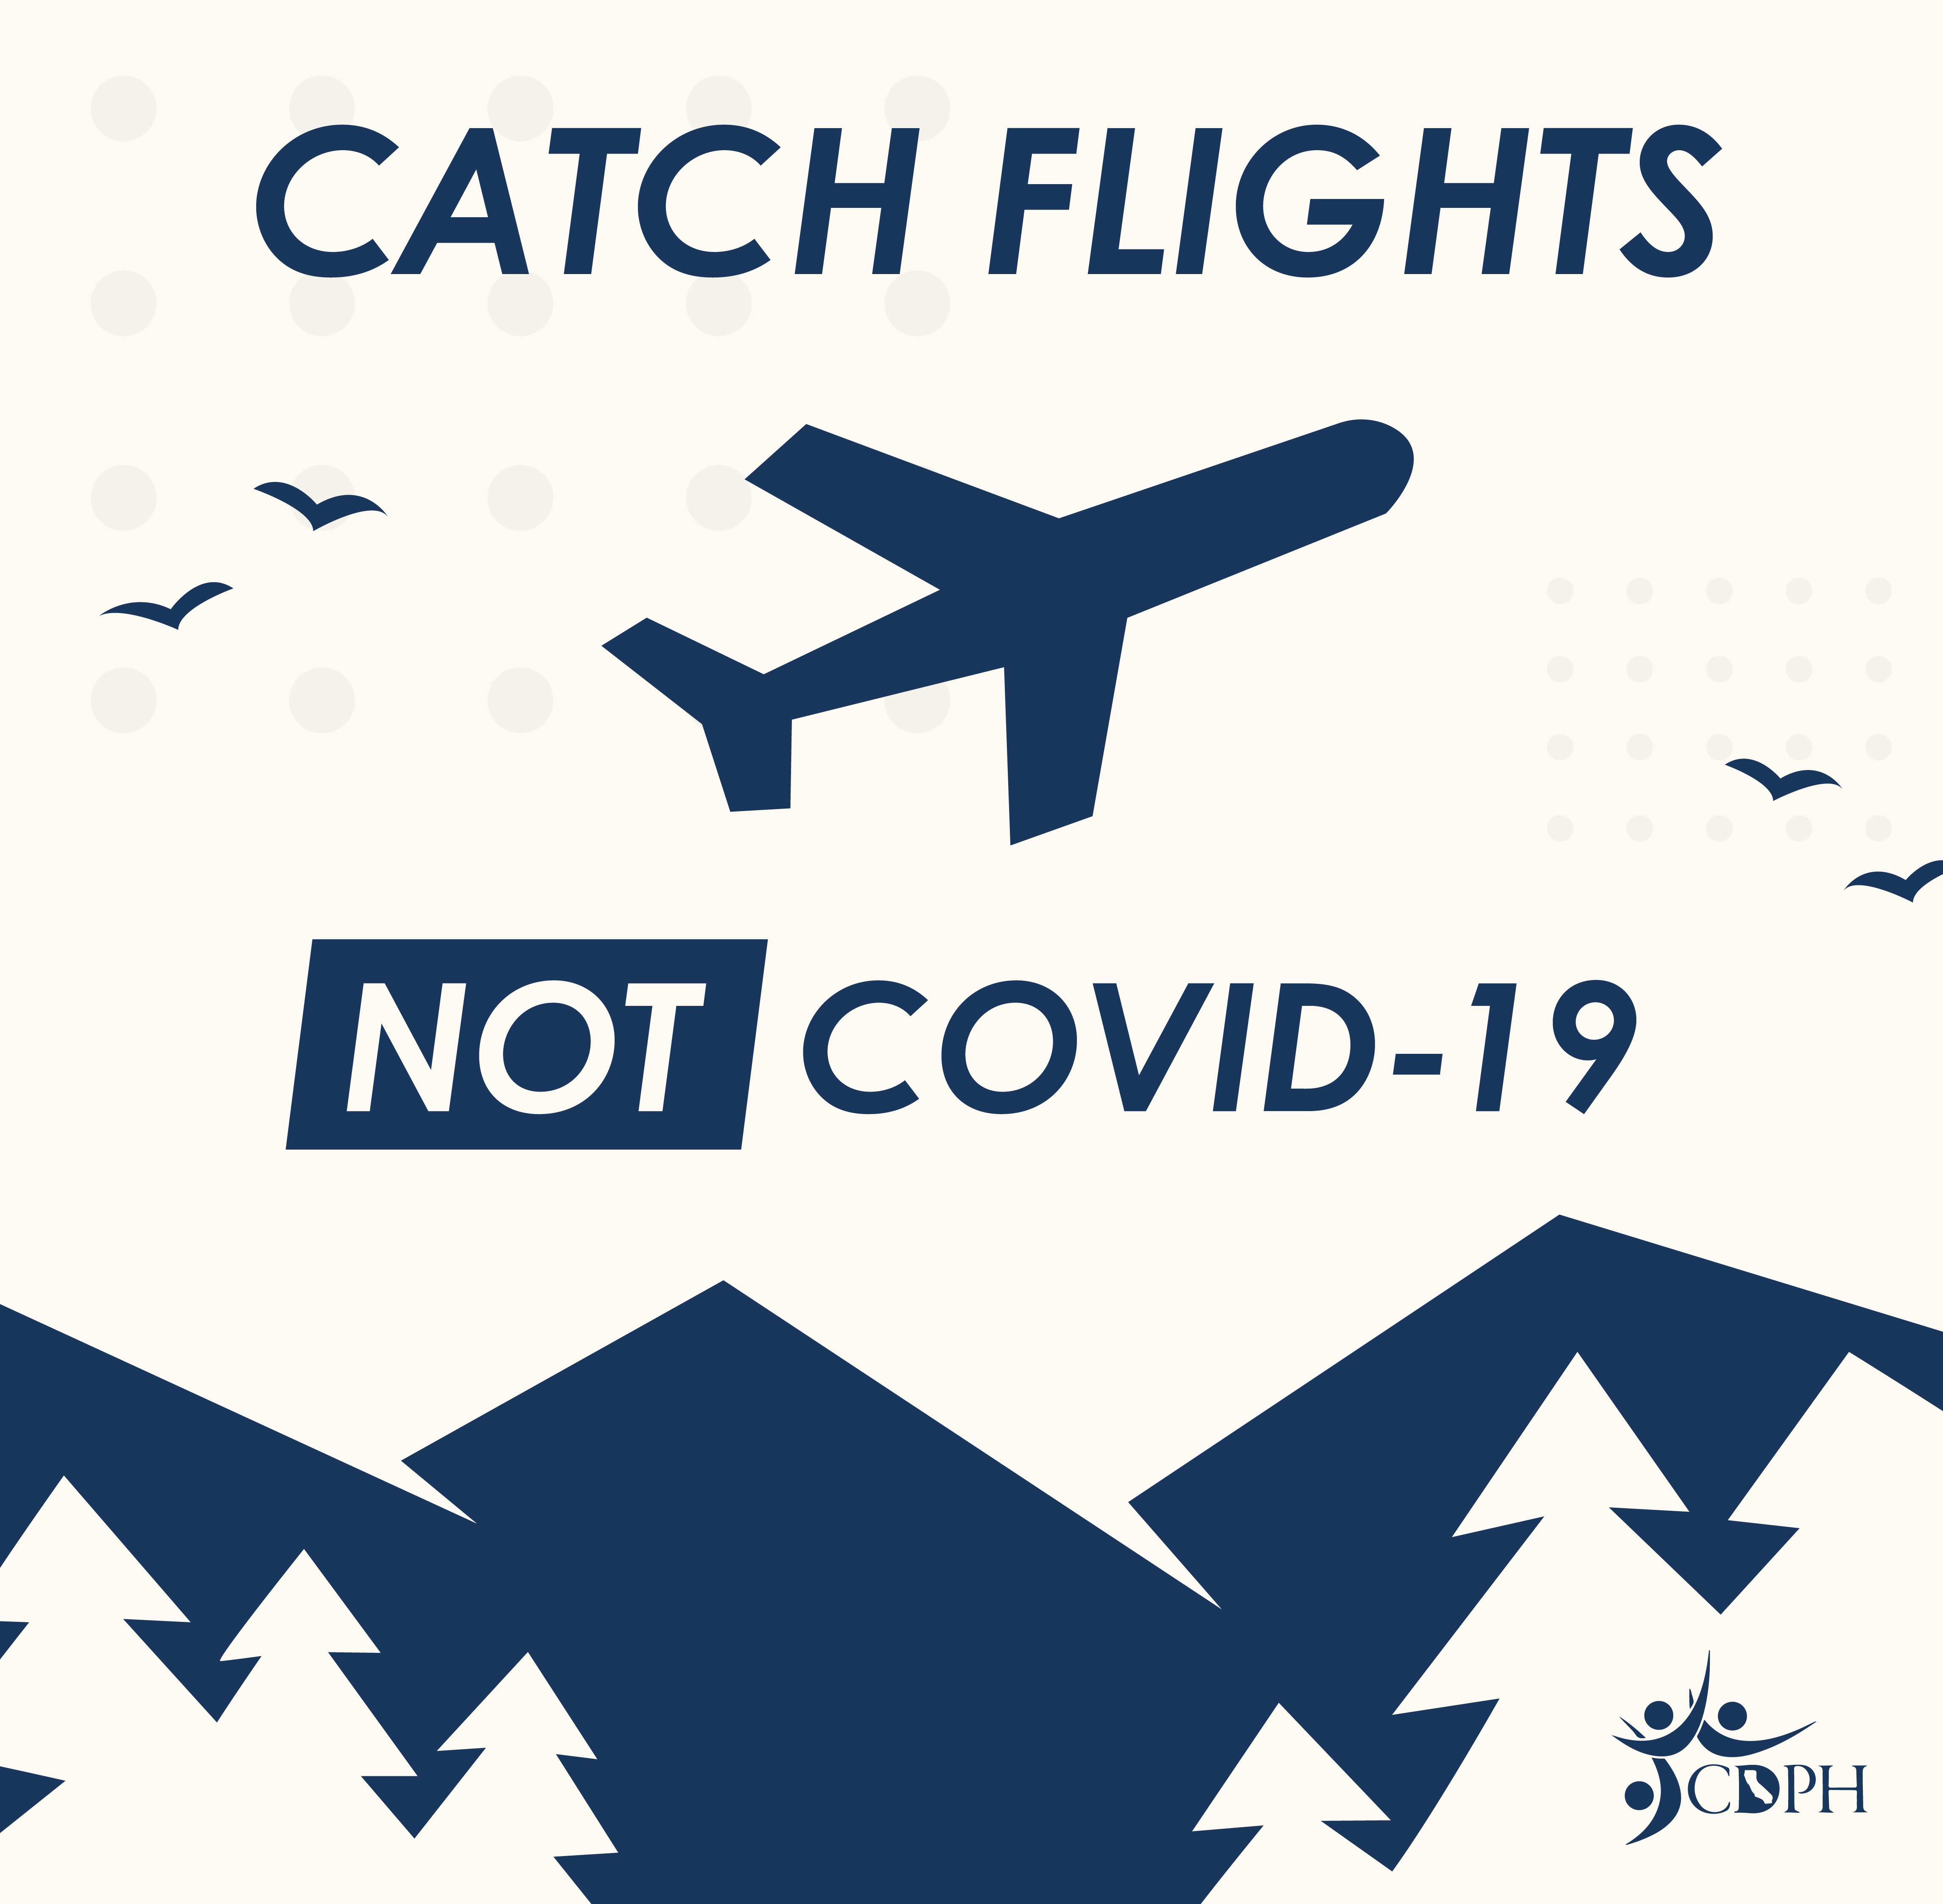 Catch flights, not Covid-19: How do you pick a 'safe' travel destination?